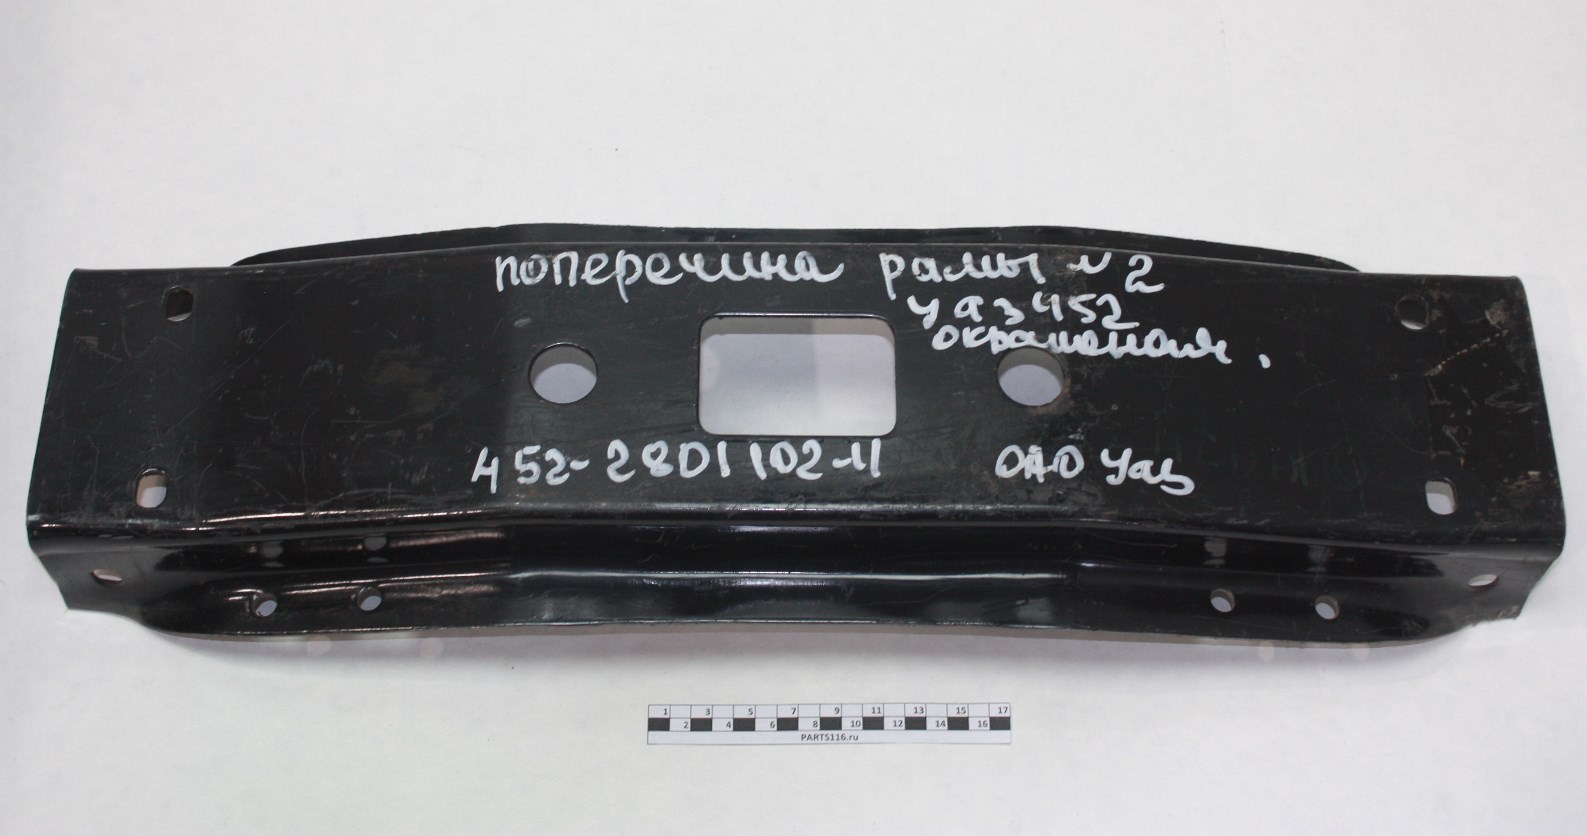 Поперечина рамы №2 окрашена на Уаз-452 ОАО УАЗ (452-2801102-11)